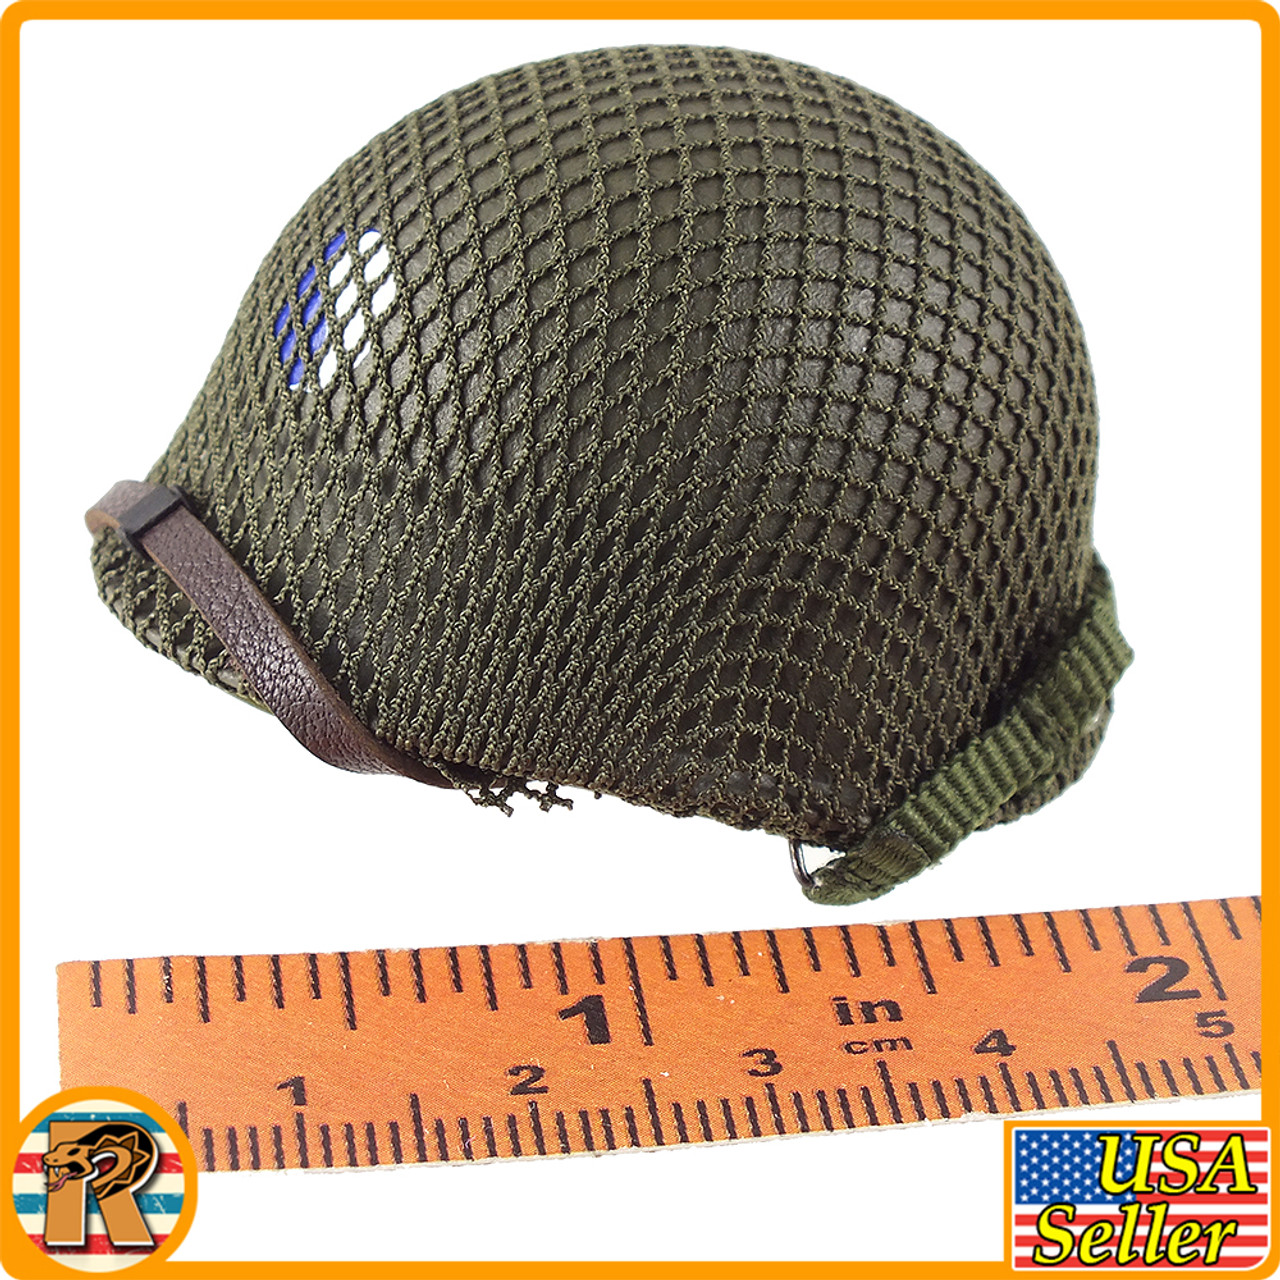 Corporal Upham - Helmet 29th w/ Net (Metal) - 1/6 Scale -